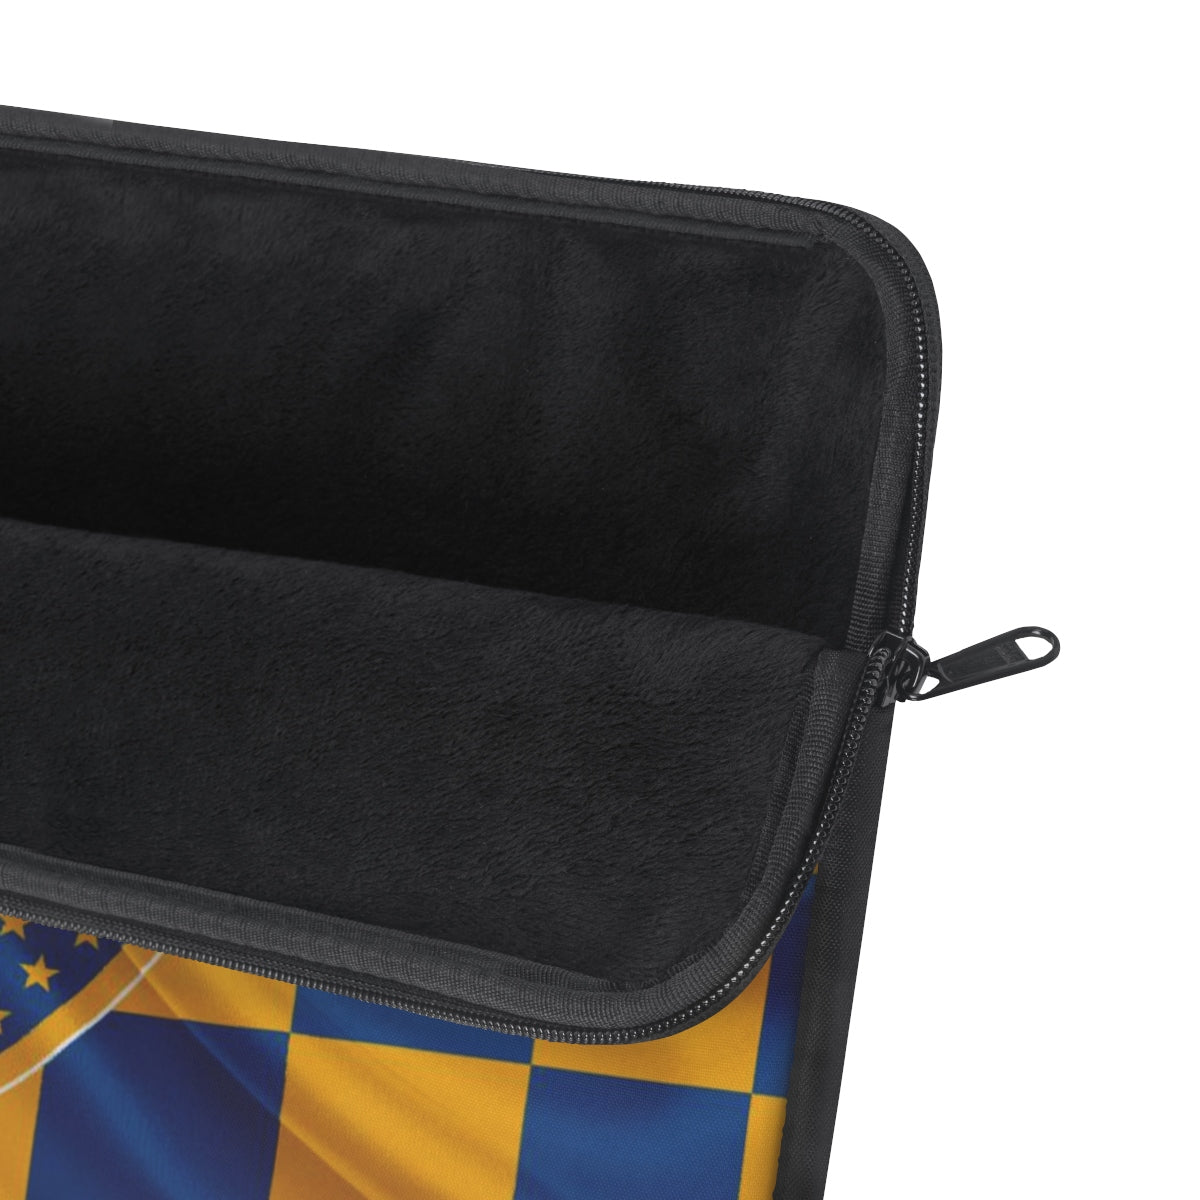 Boca Juniors Laptop Sleeve